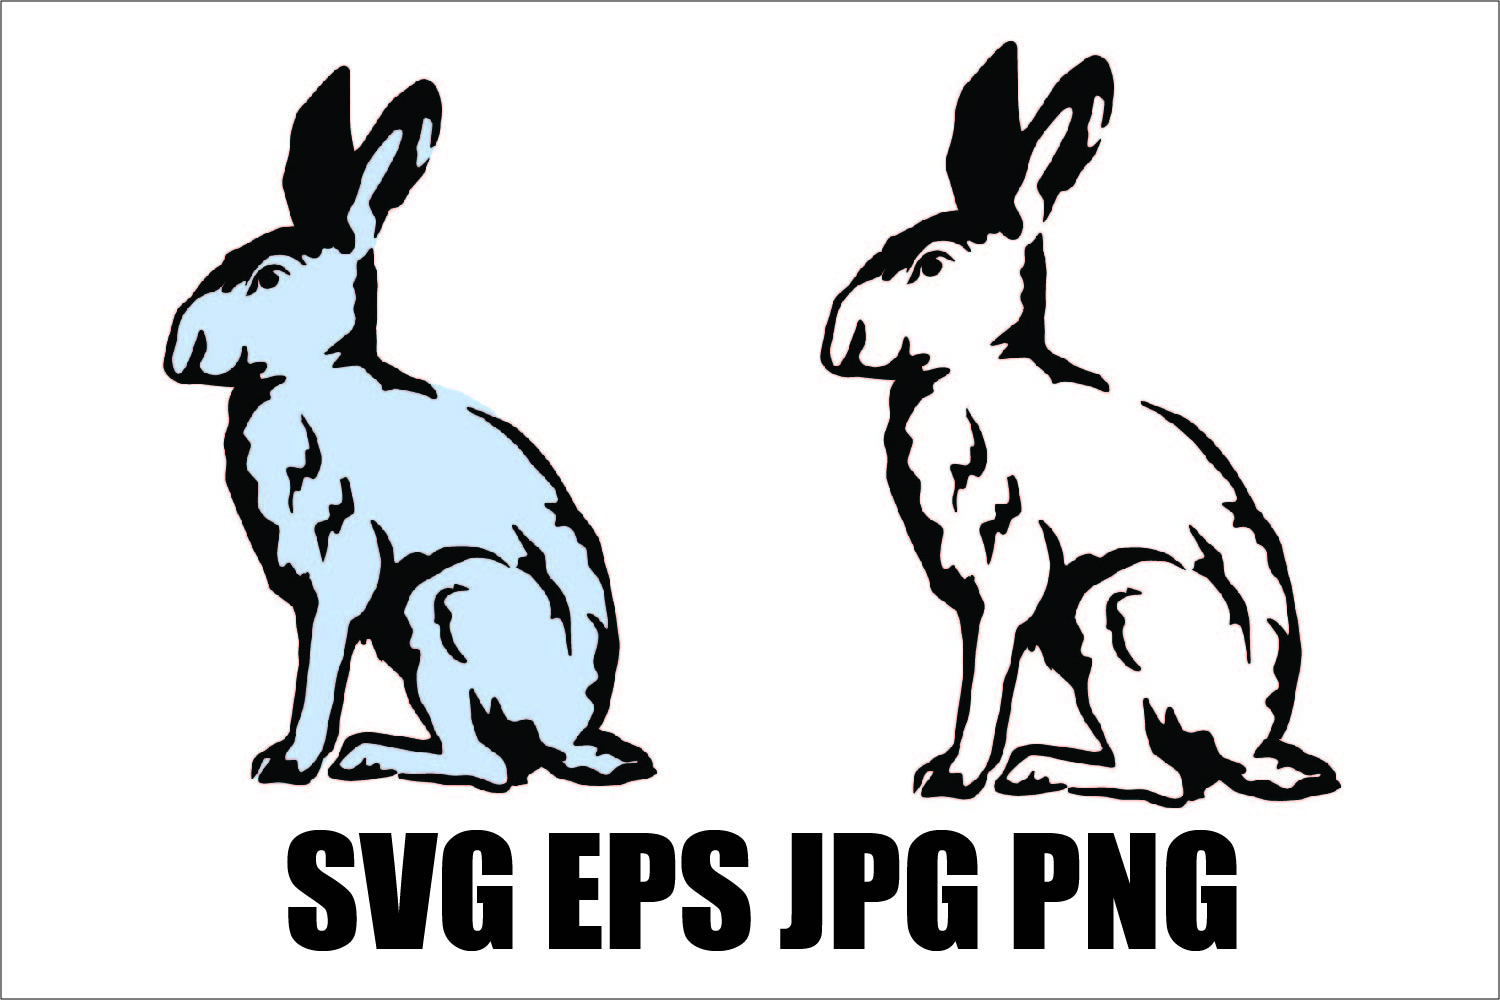 Download Rabbit 2 versions included - EPS / SVG / JPG / PNG